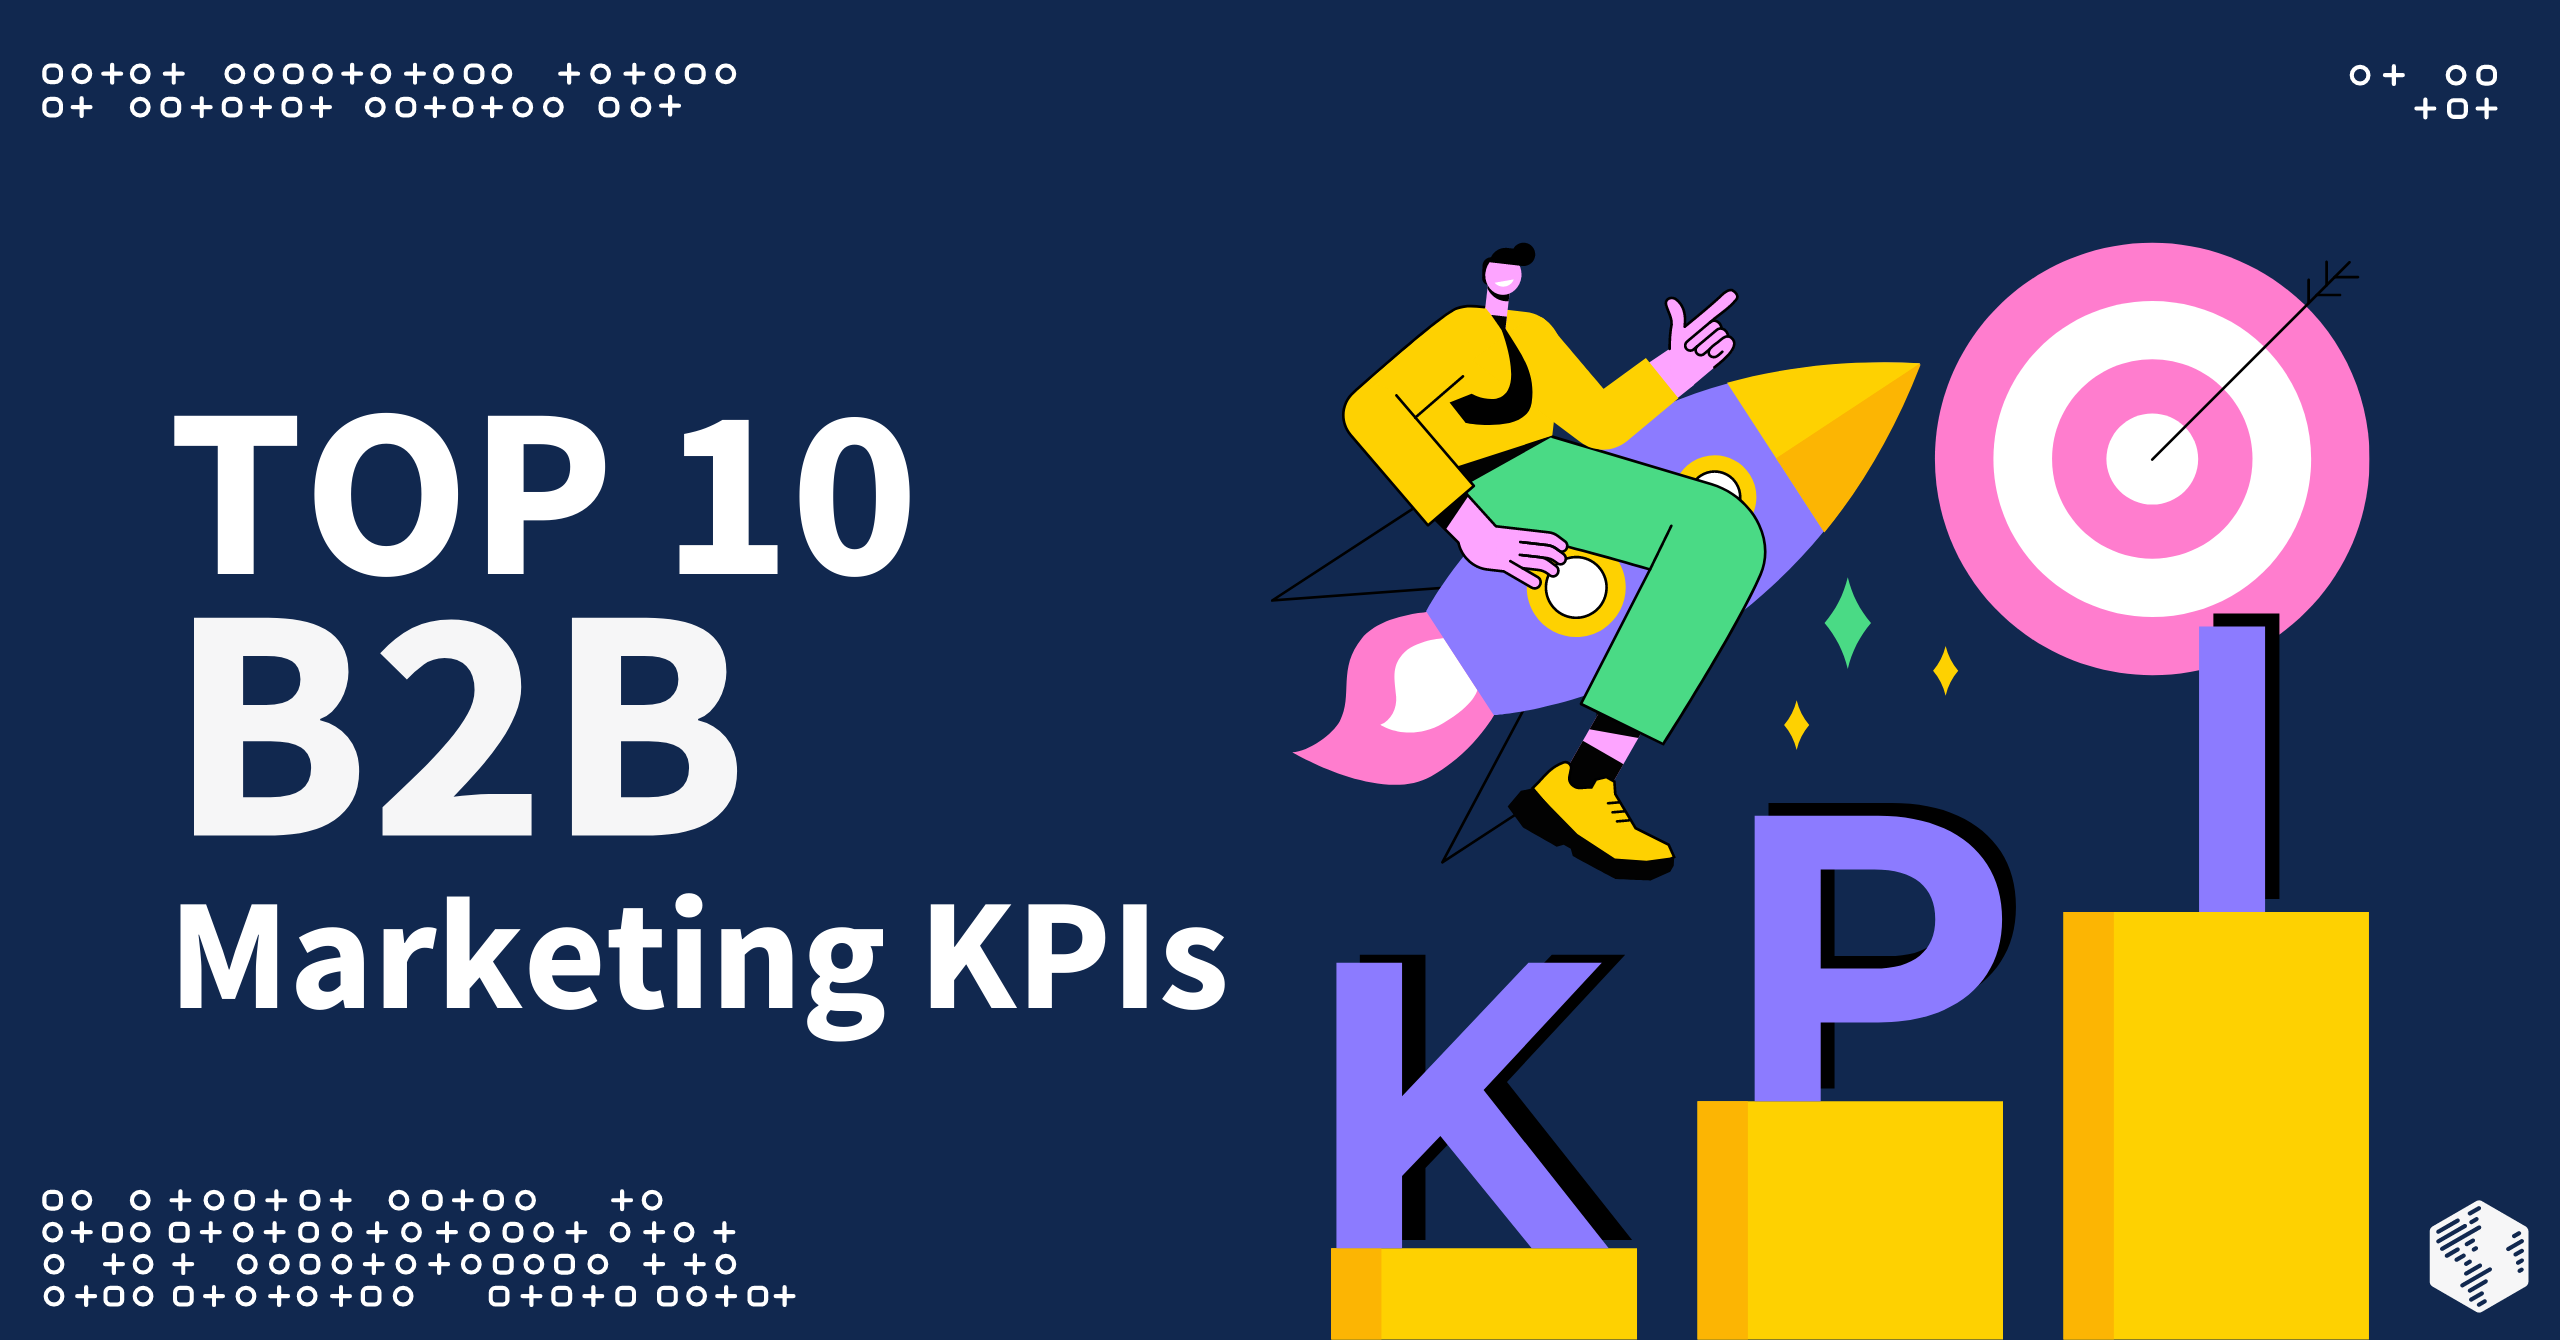 Top 10 B2B Marketing KPIs